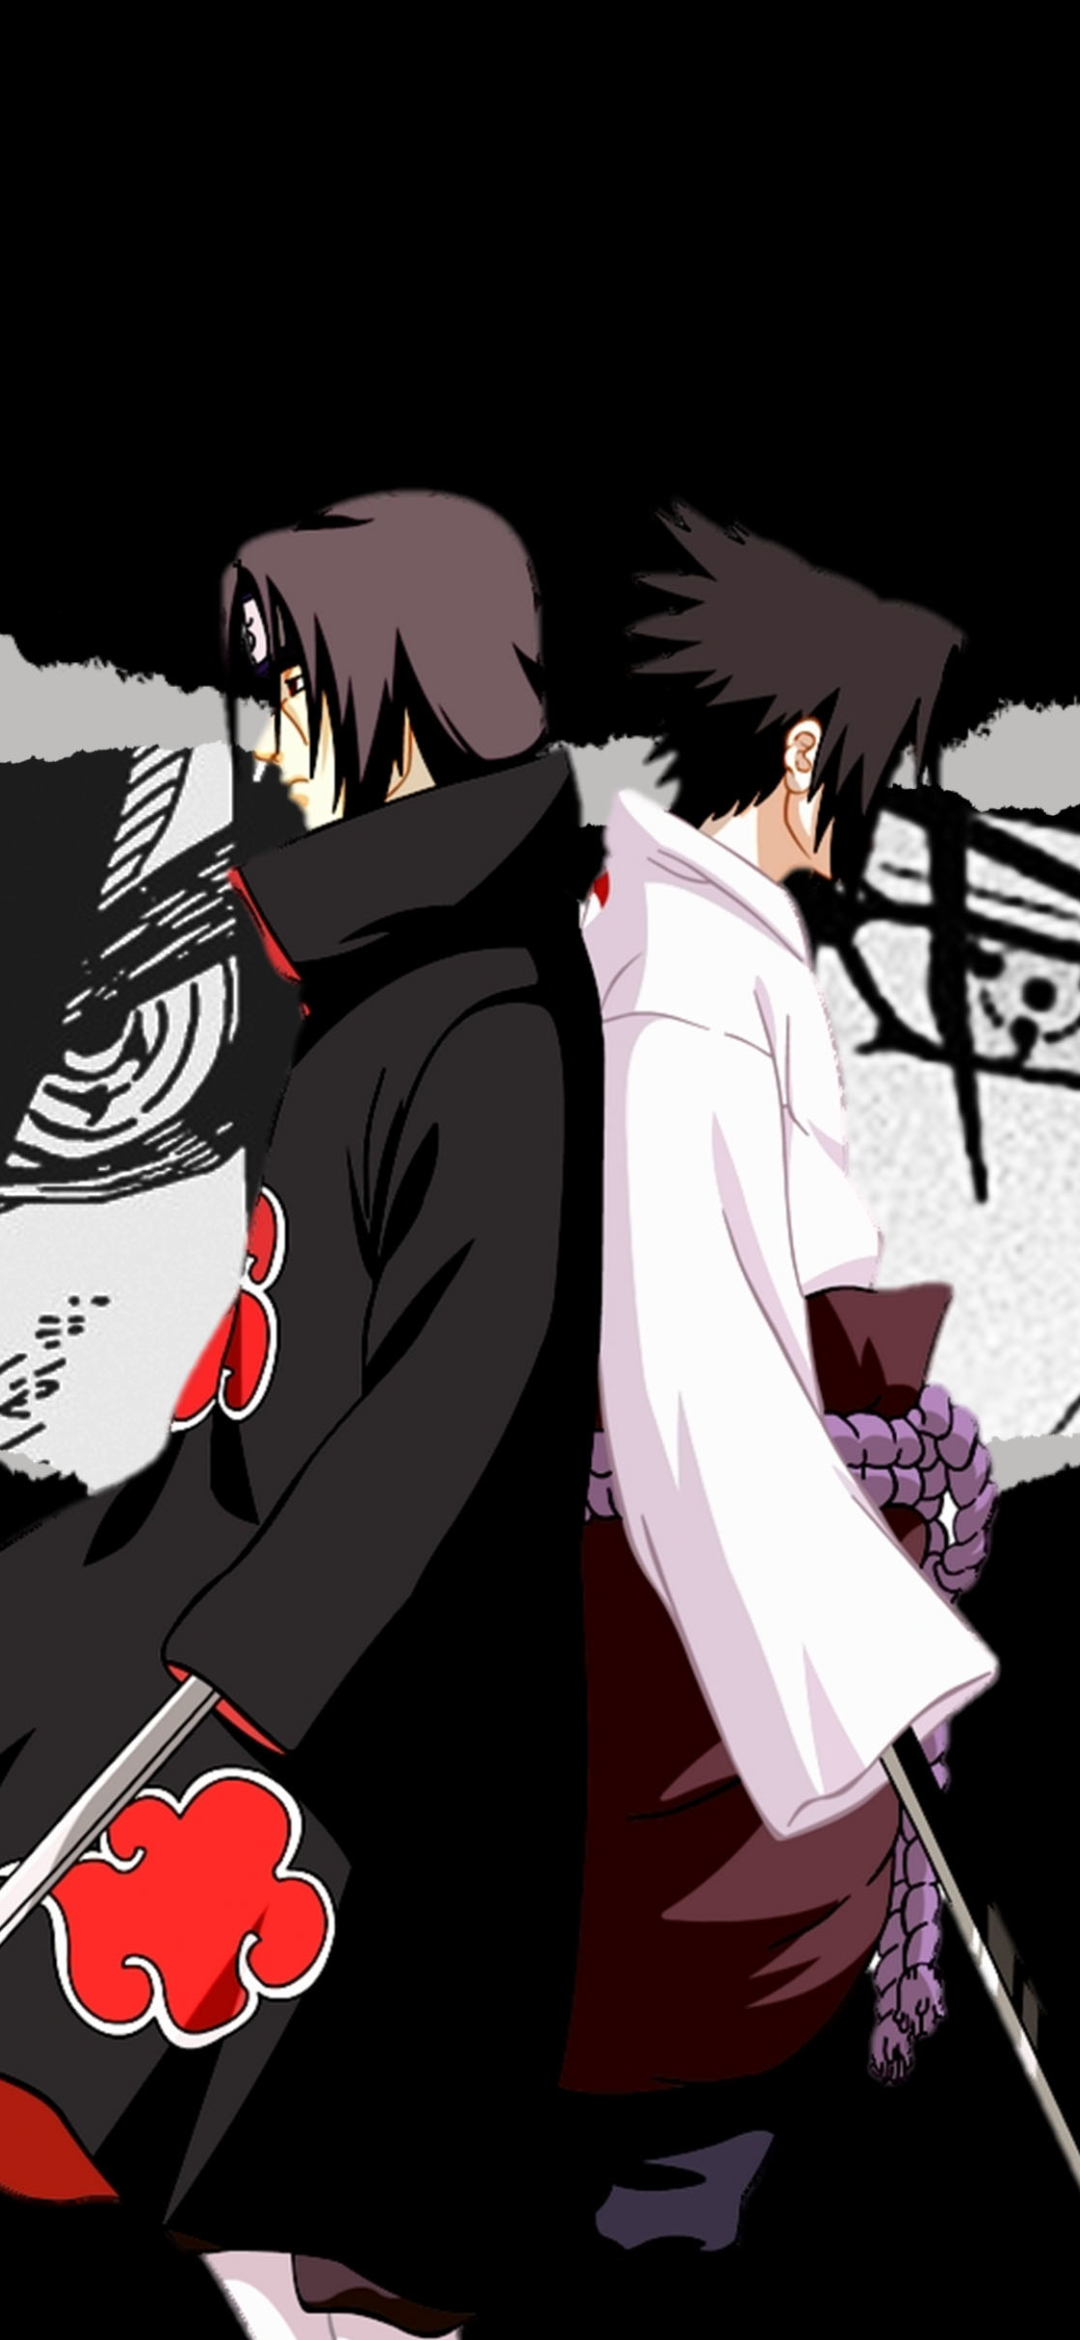 1080x2340 Itachi Vs Sasuke 4k Naruto 1080x2340 Resolution Wallpaper Hd Anime 4k Wallpapers Images Photos And Background Wallpapers Den